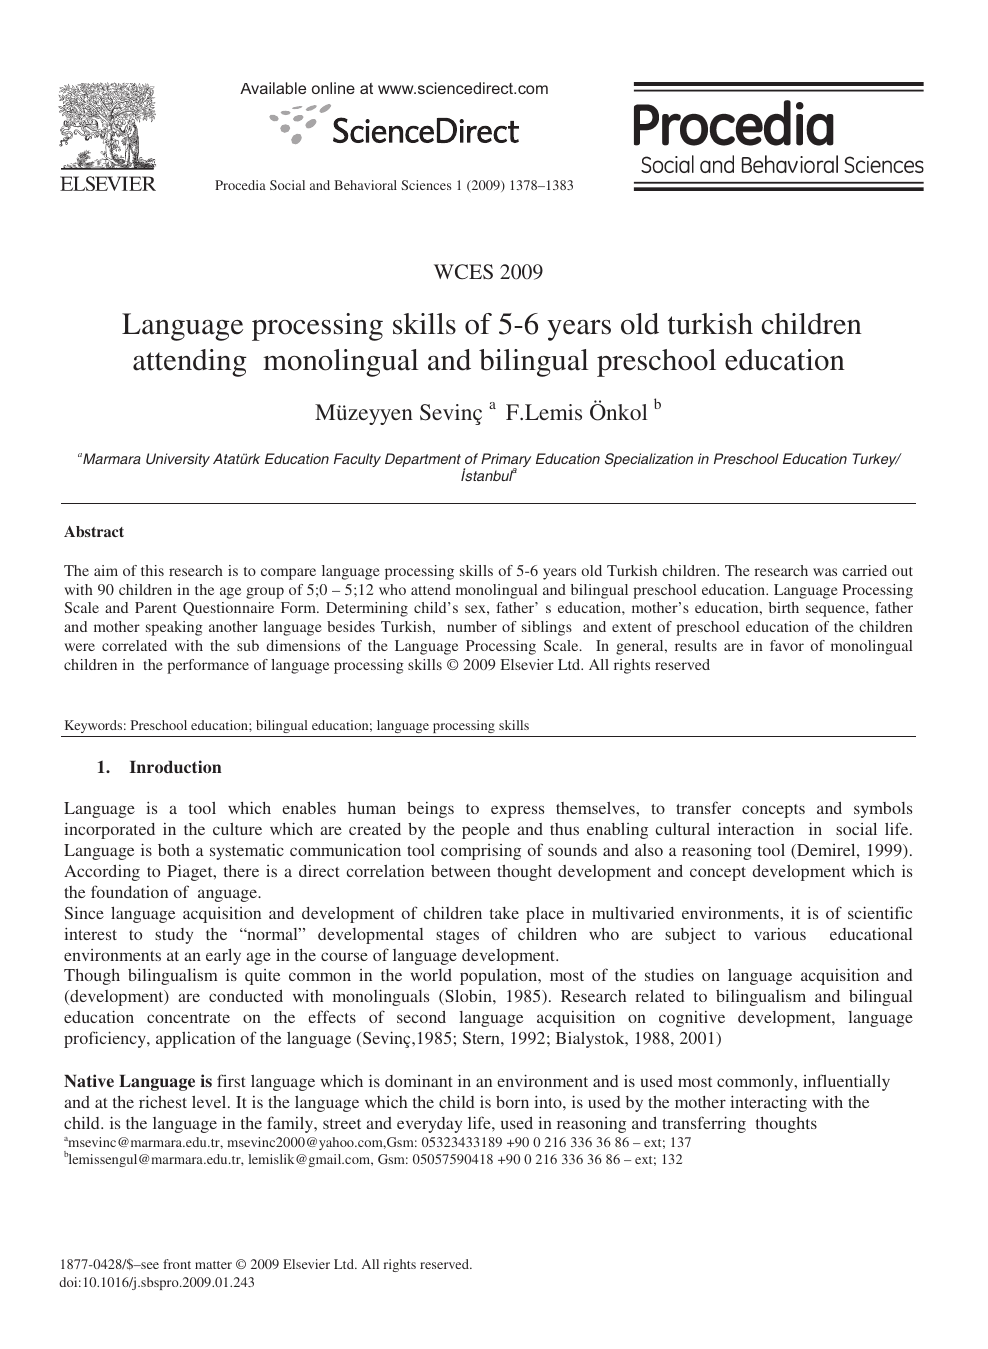 bilingual education research paper